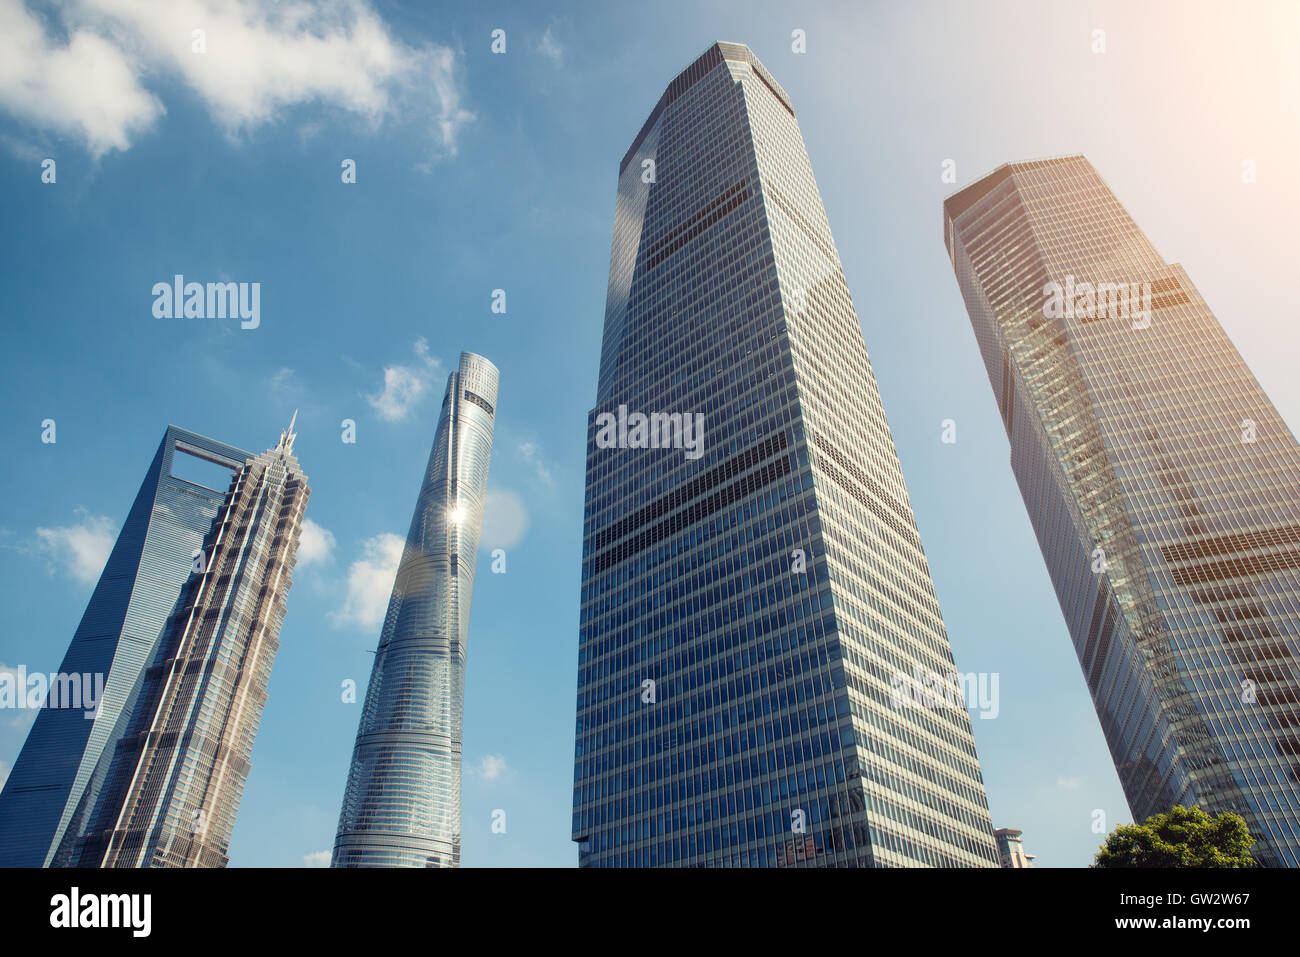 Shanghai skyscraper in Lujiazui Shanghai financial district in Shanghai, China. Stock Photo